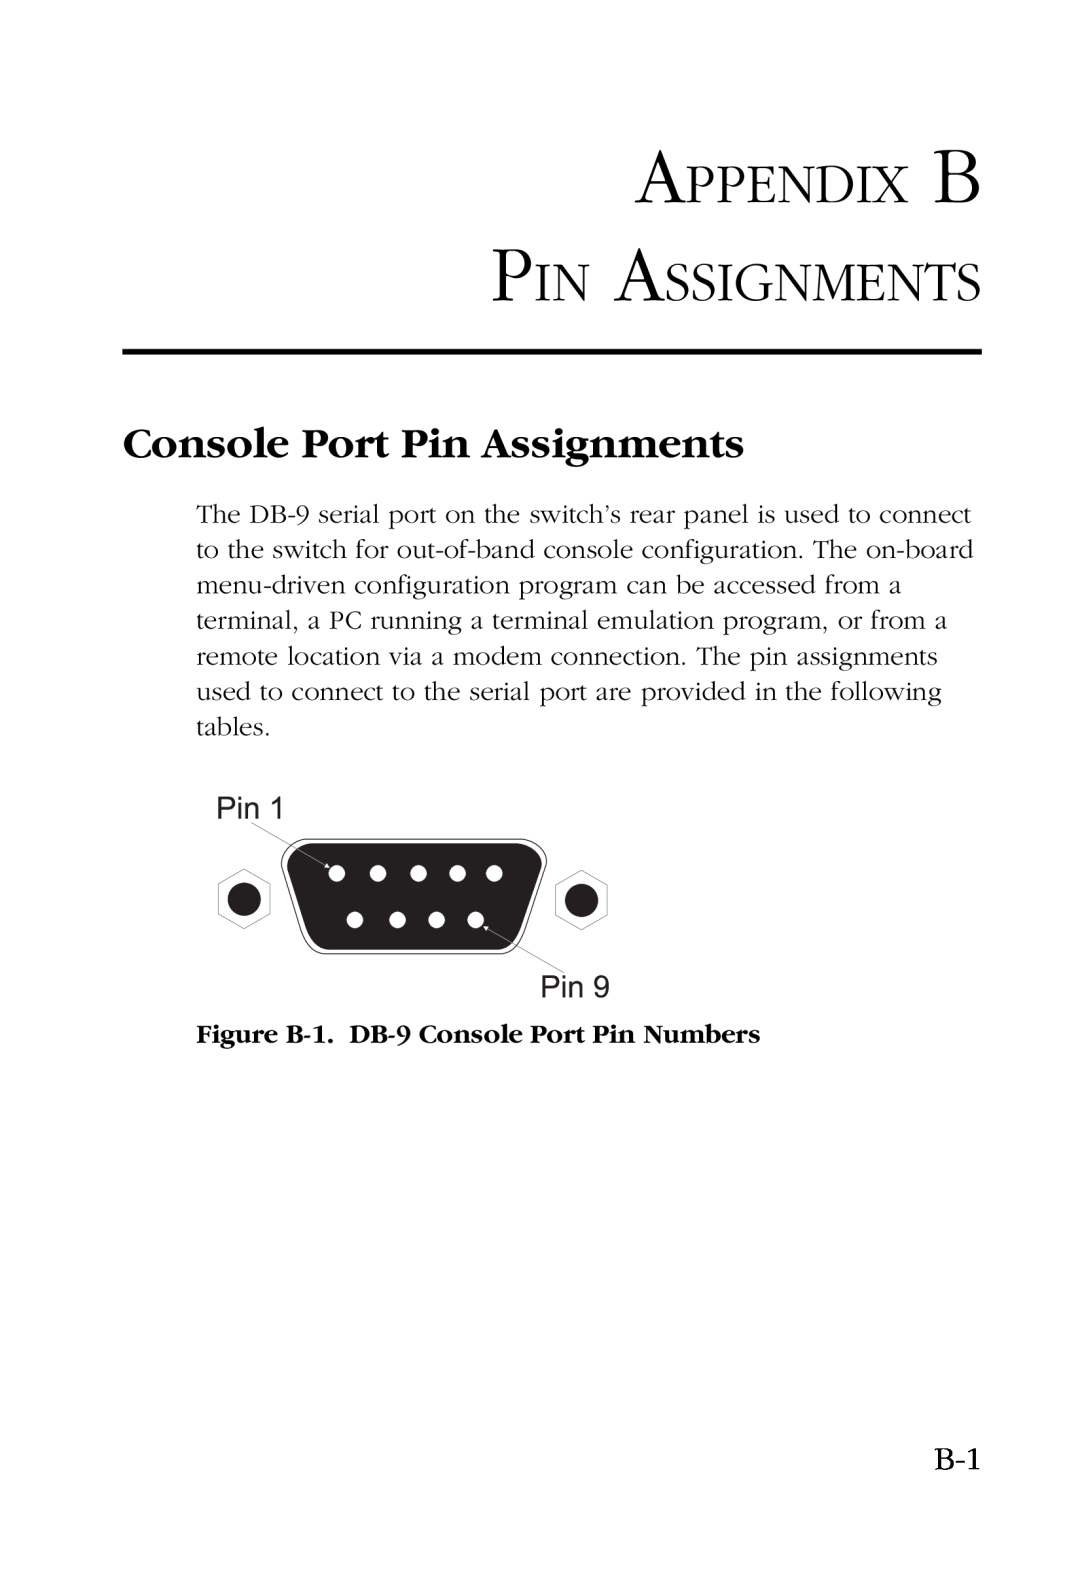 SMC Networks SMC6924VF Appendix B Pin Assignments, Console Port Pin Assignments, Figure B-1. DB-9 Console Port Pin Numbers 